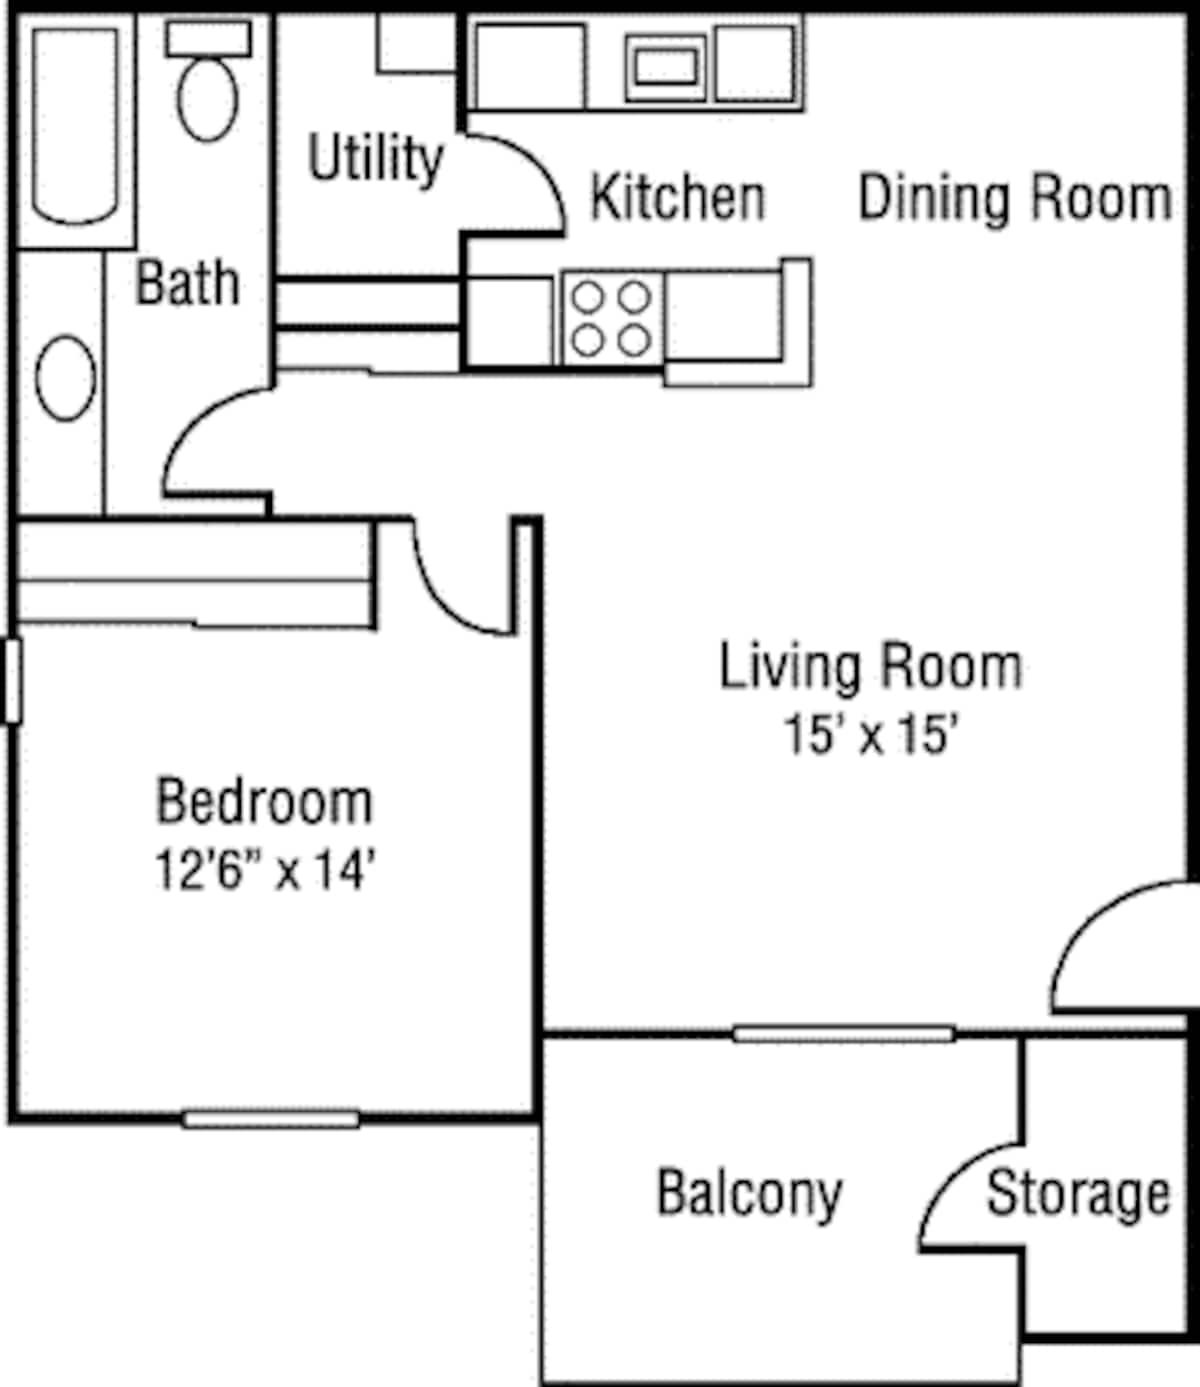 Floorplan diagram for The Larkspur, showing 1 bedroom